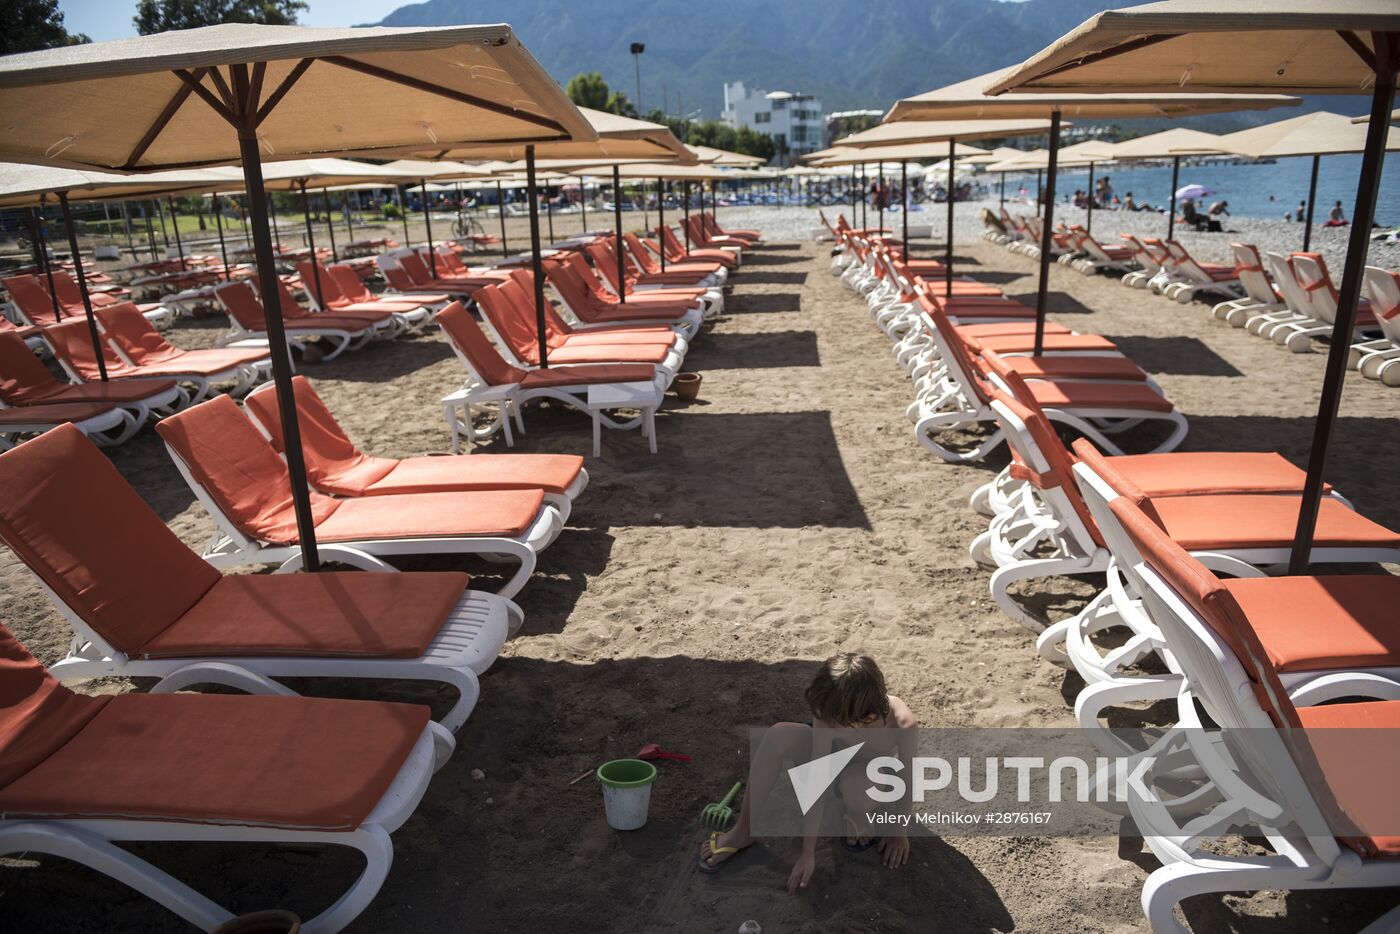 Russian tourists' flow drops at Turkish resorts